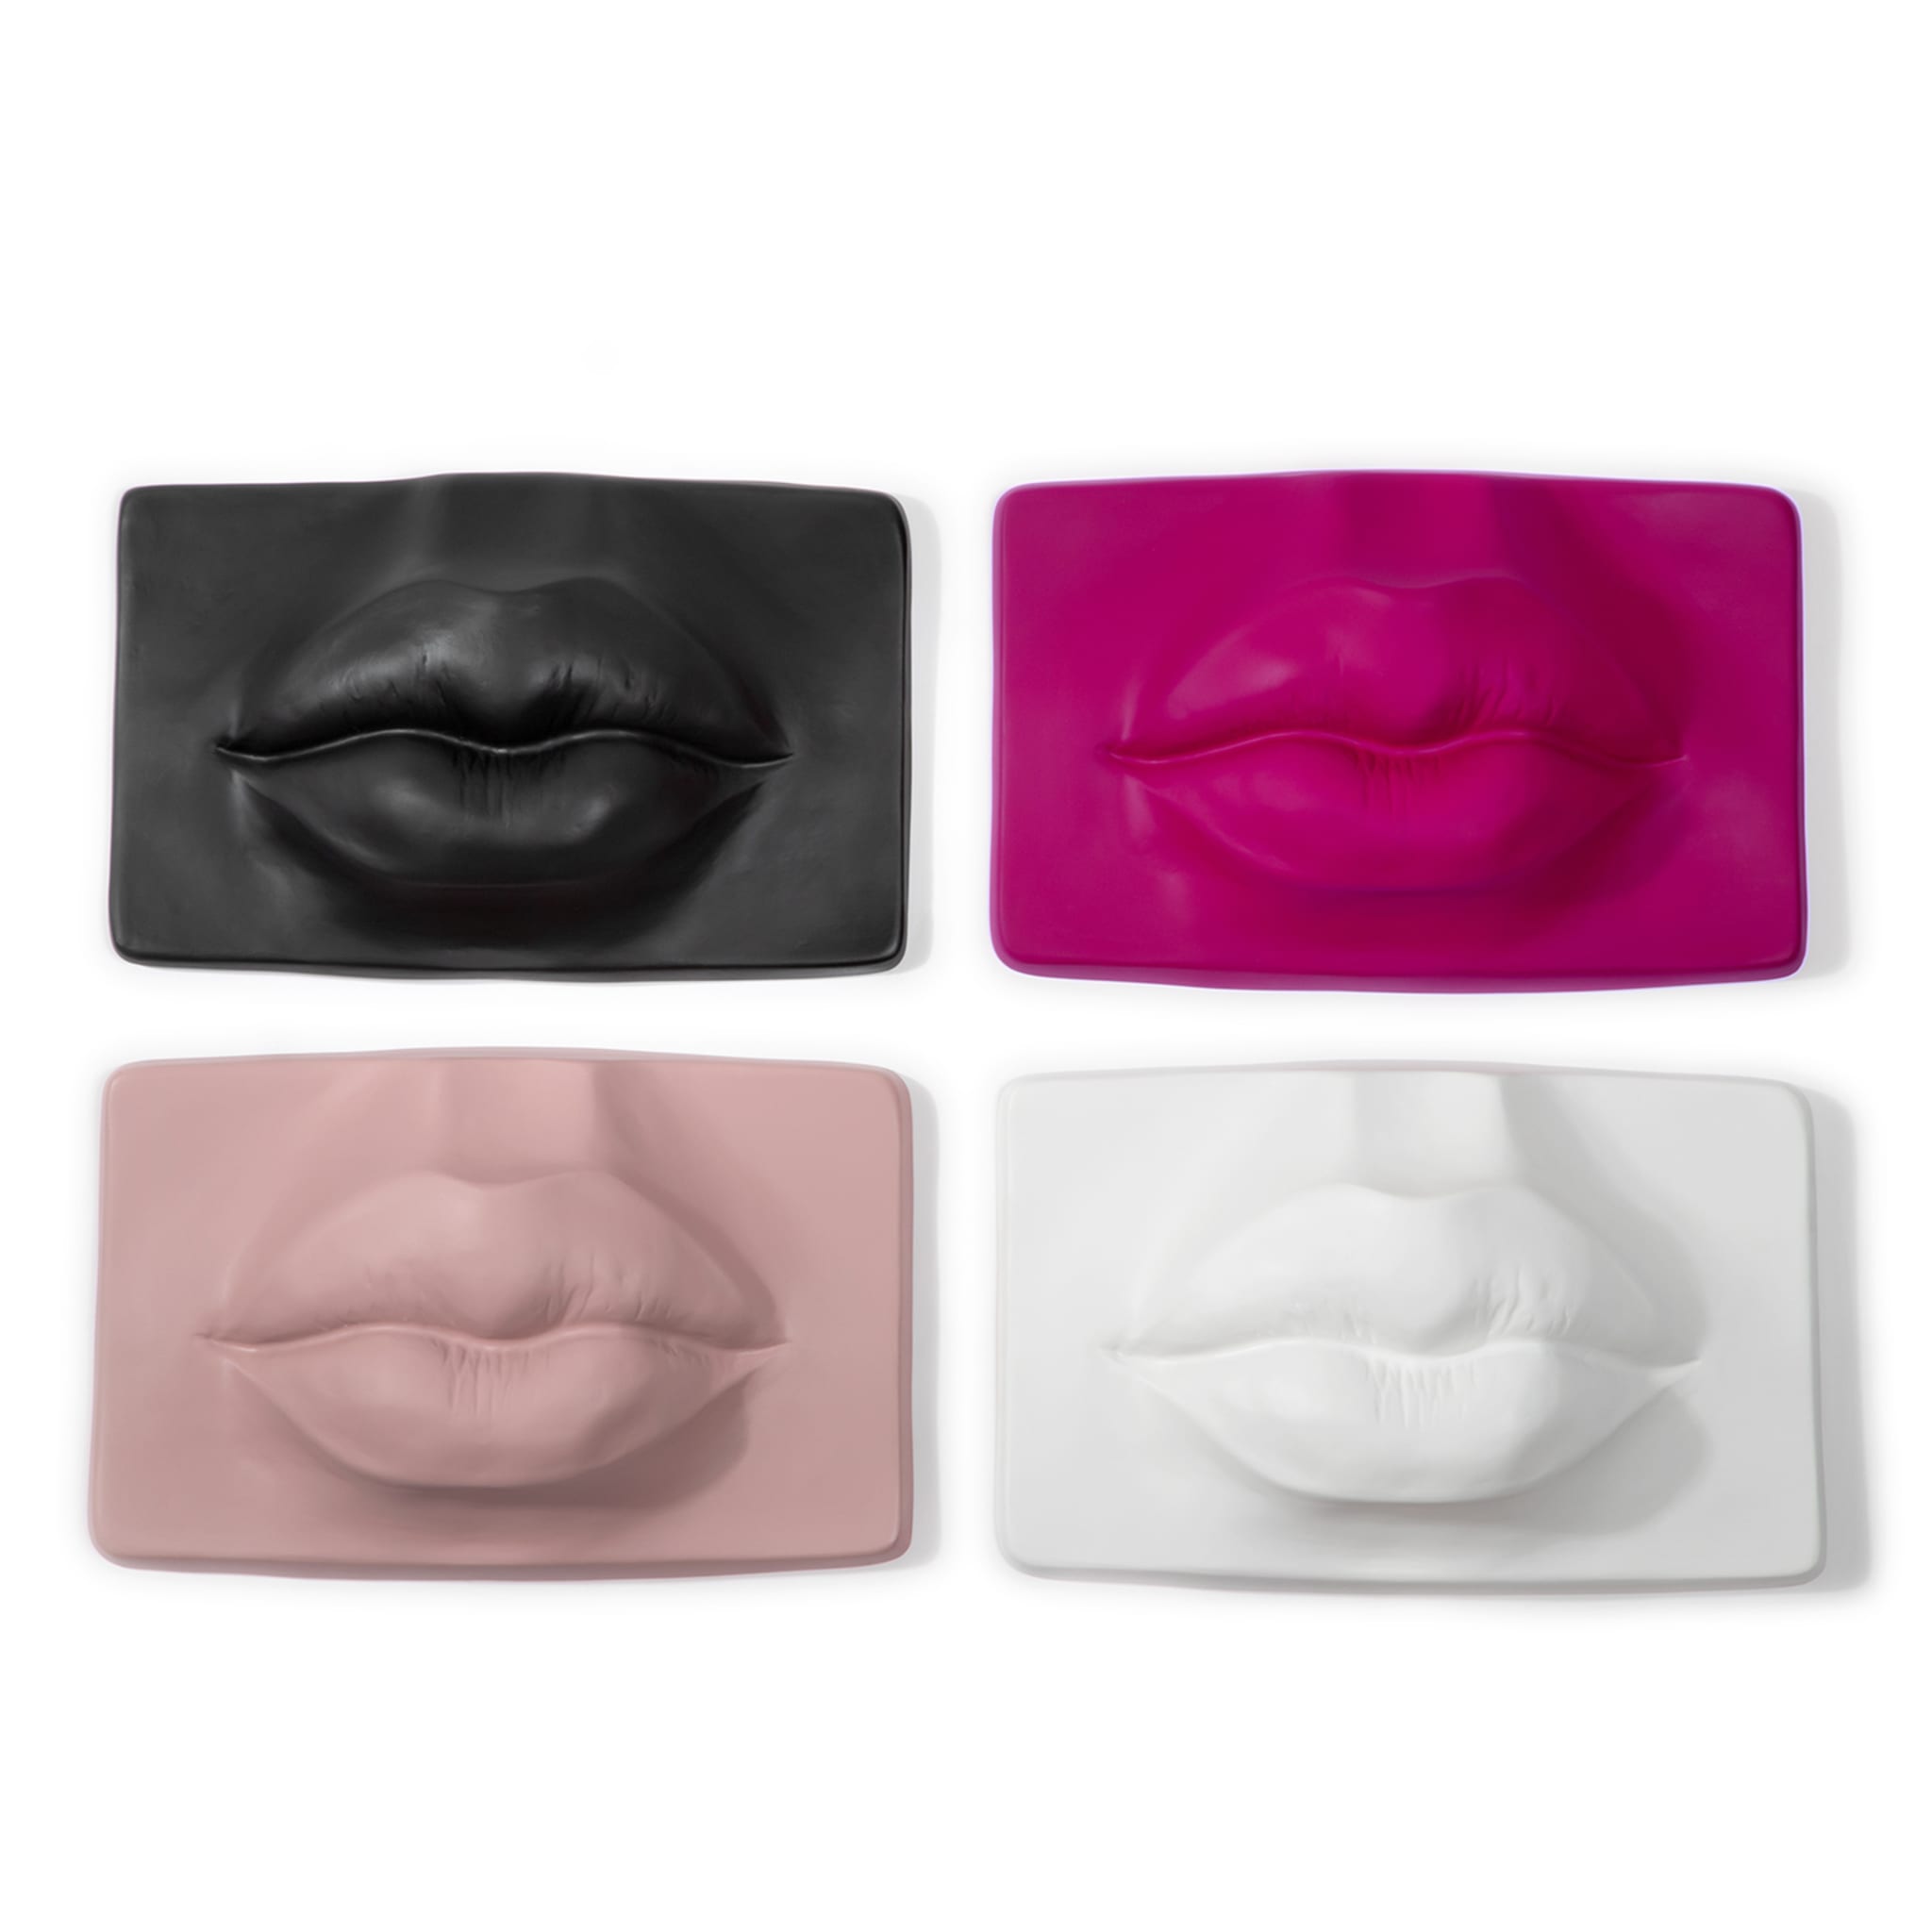 Lips Jolie Pink Sculpture - Alternative view 2